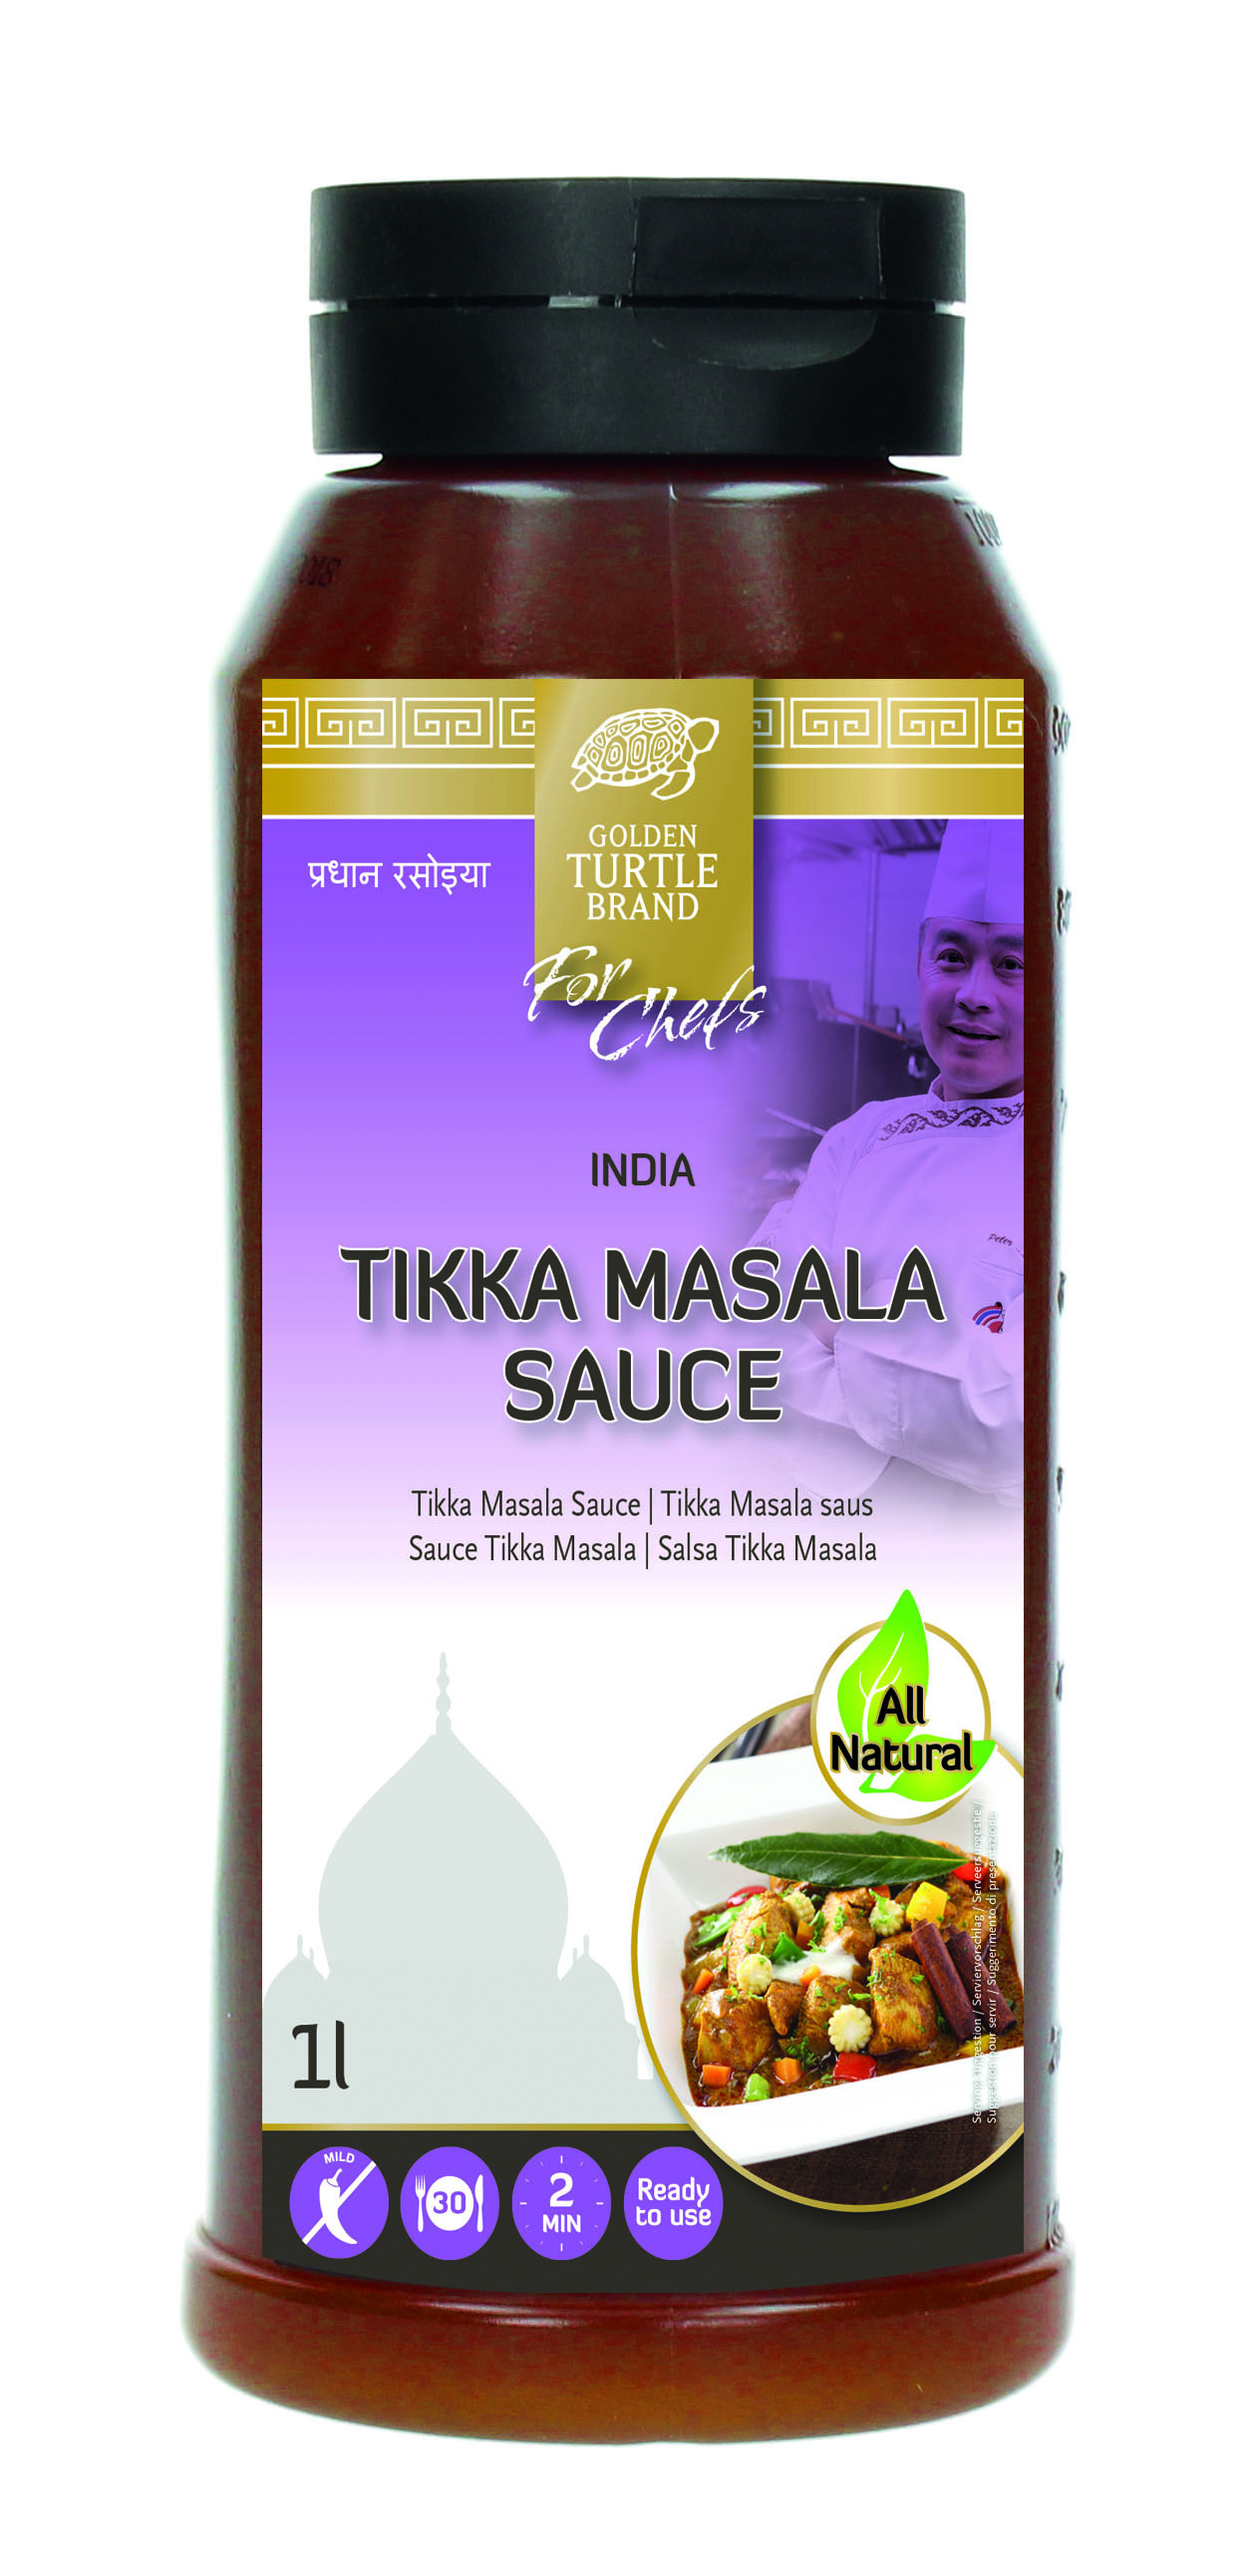 Tikka Masala saus 1L Golden Turtle Brand for Chefs